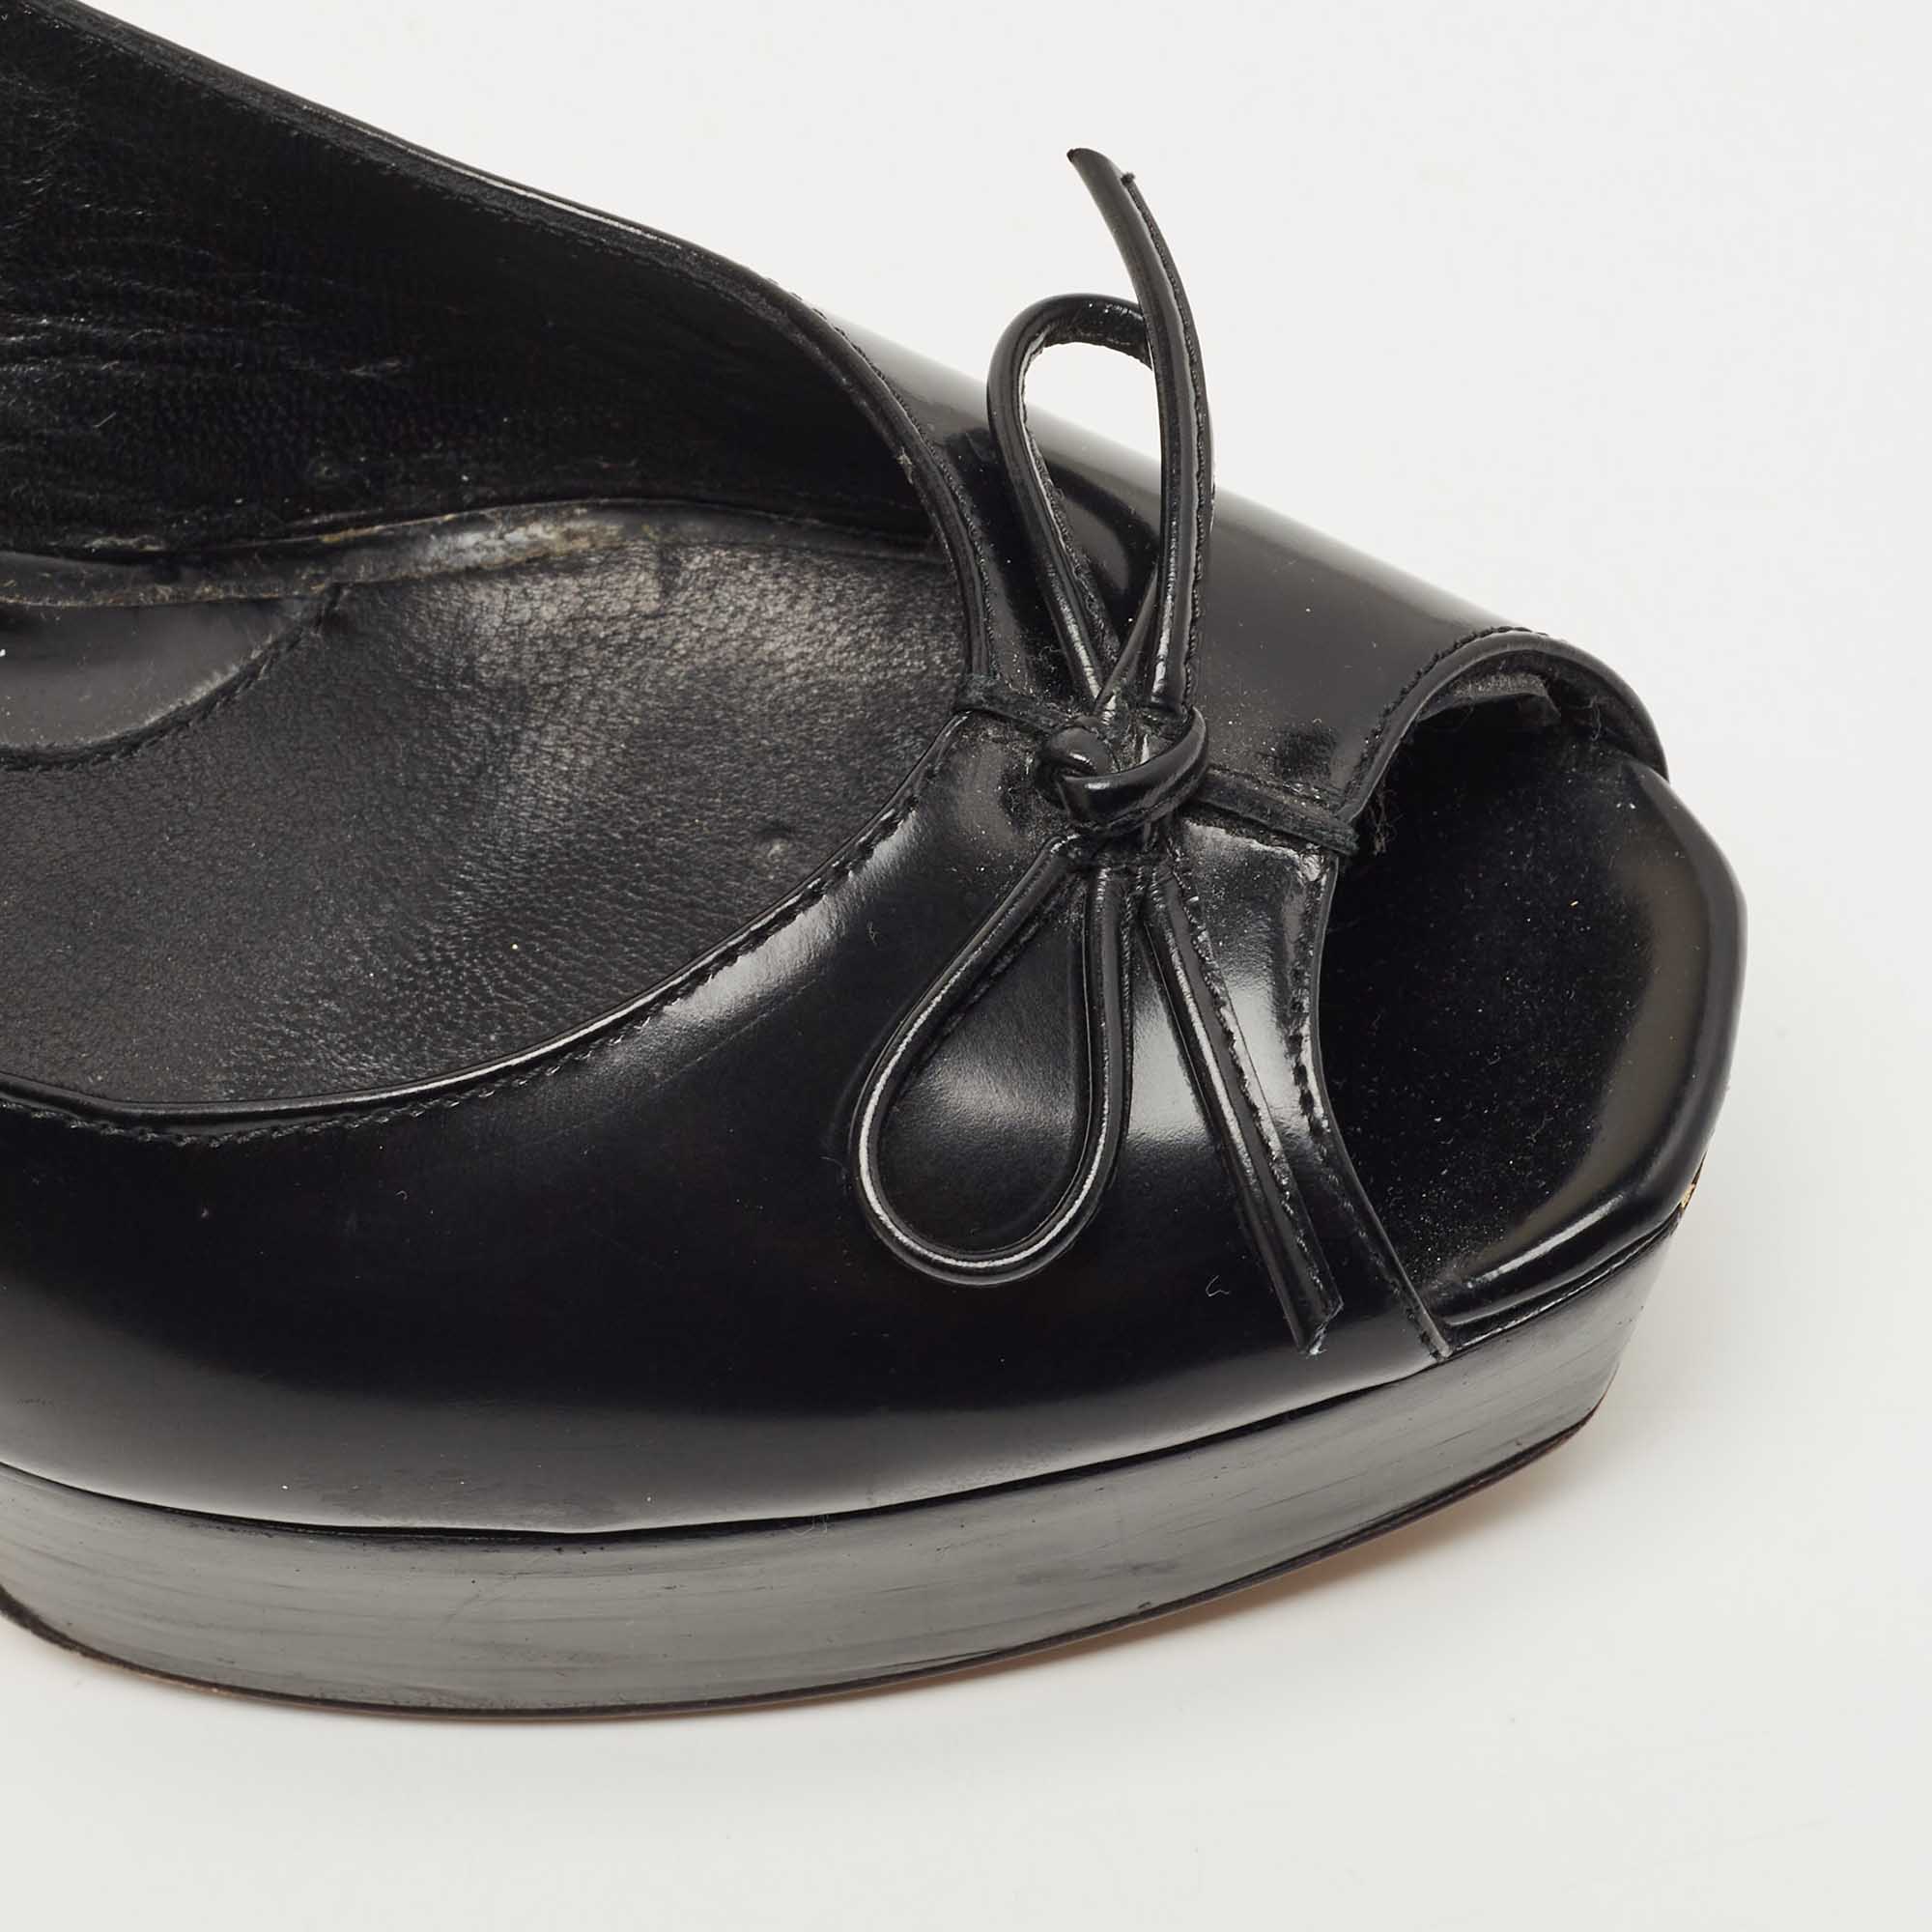 Fendi Black Leather Bow  Peep Toe  Platform Slingback  Pumps Size 41